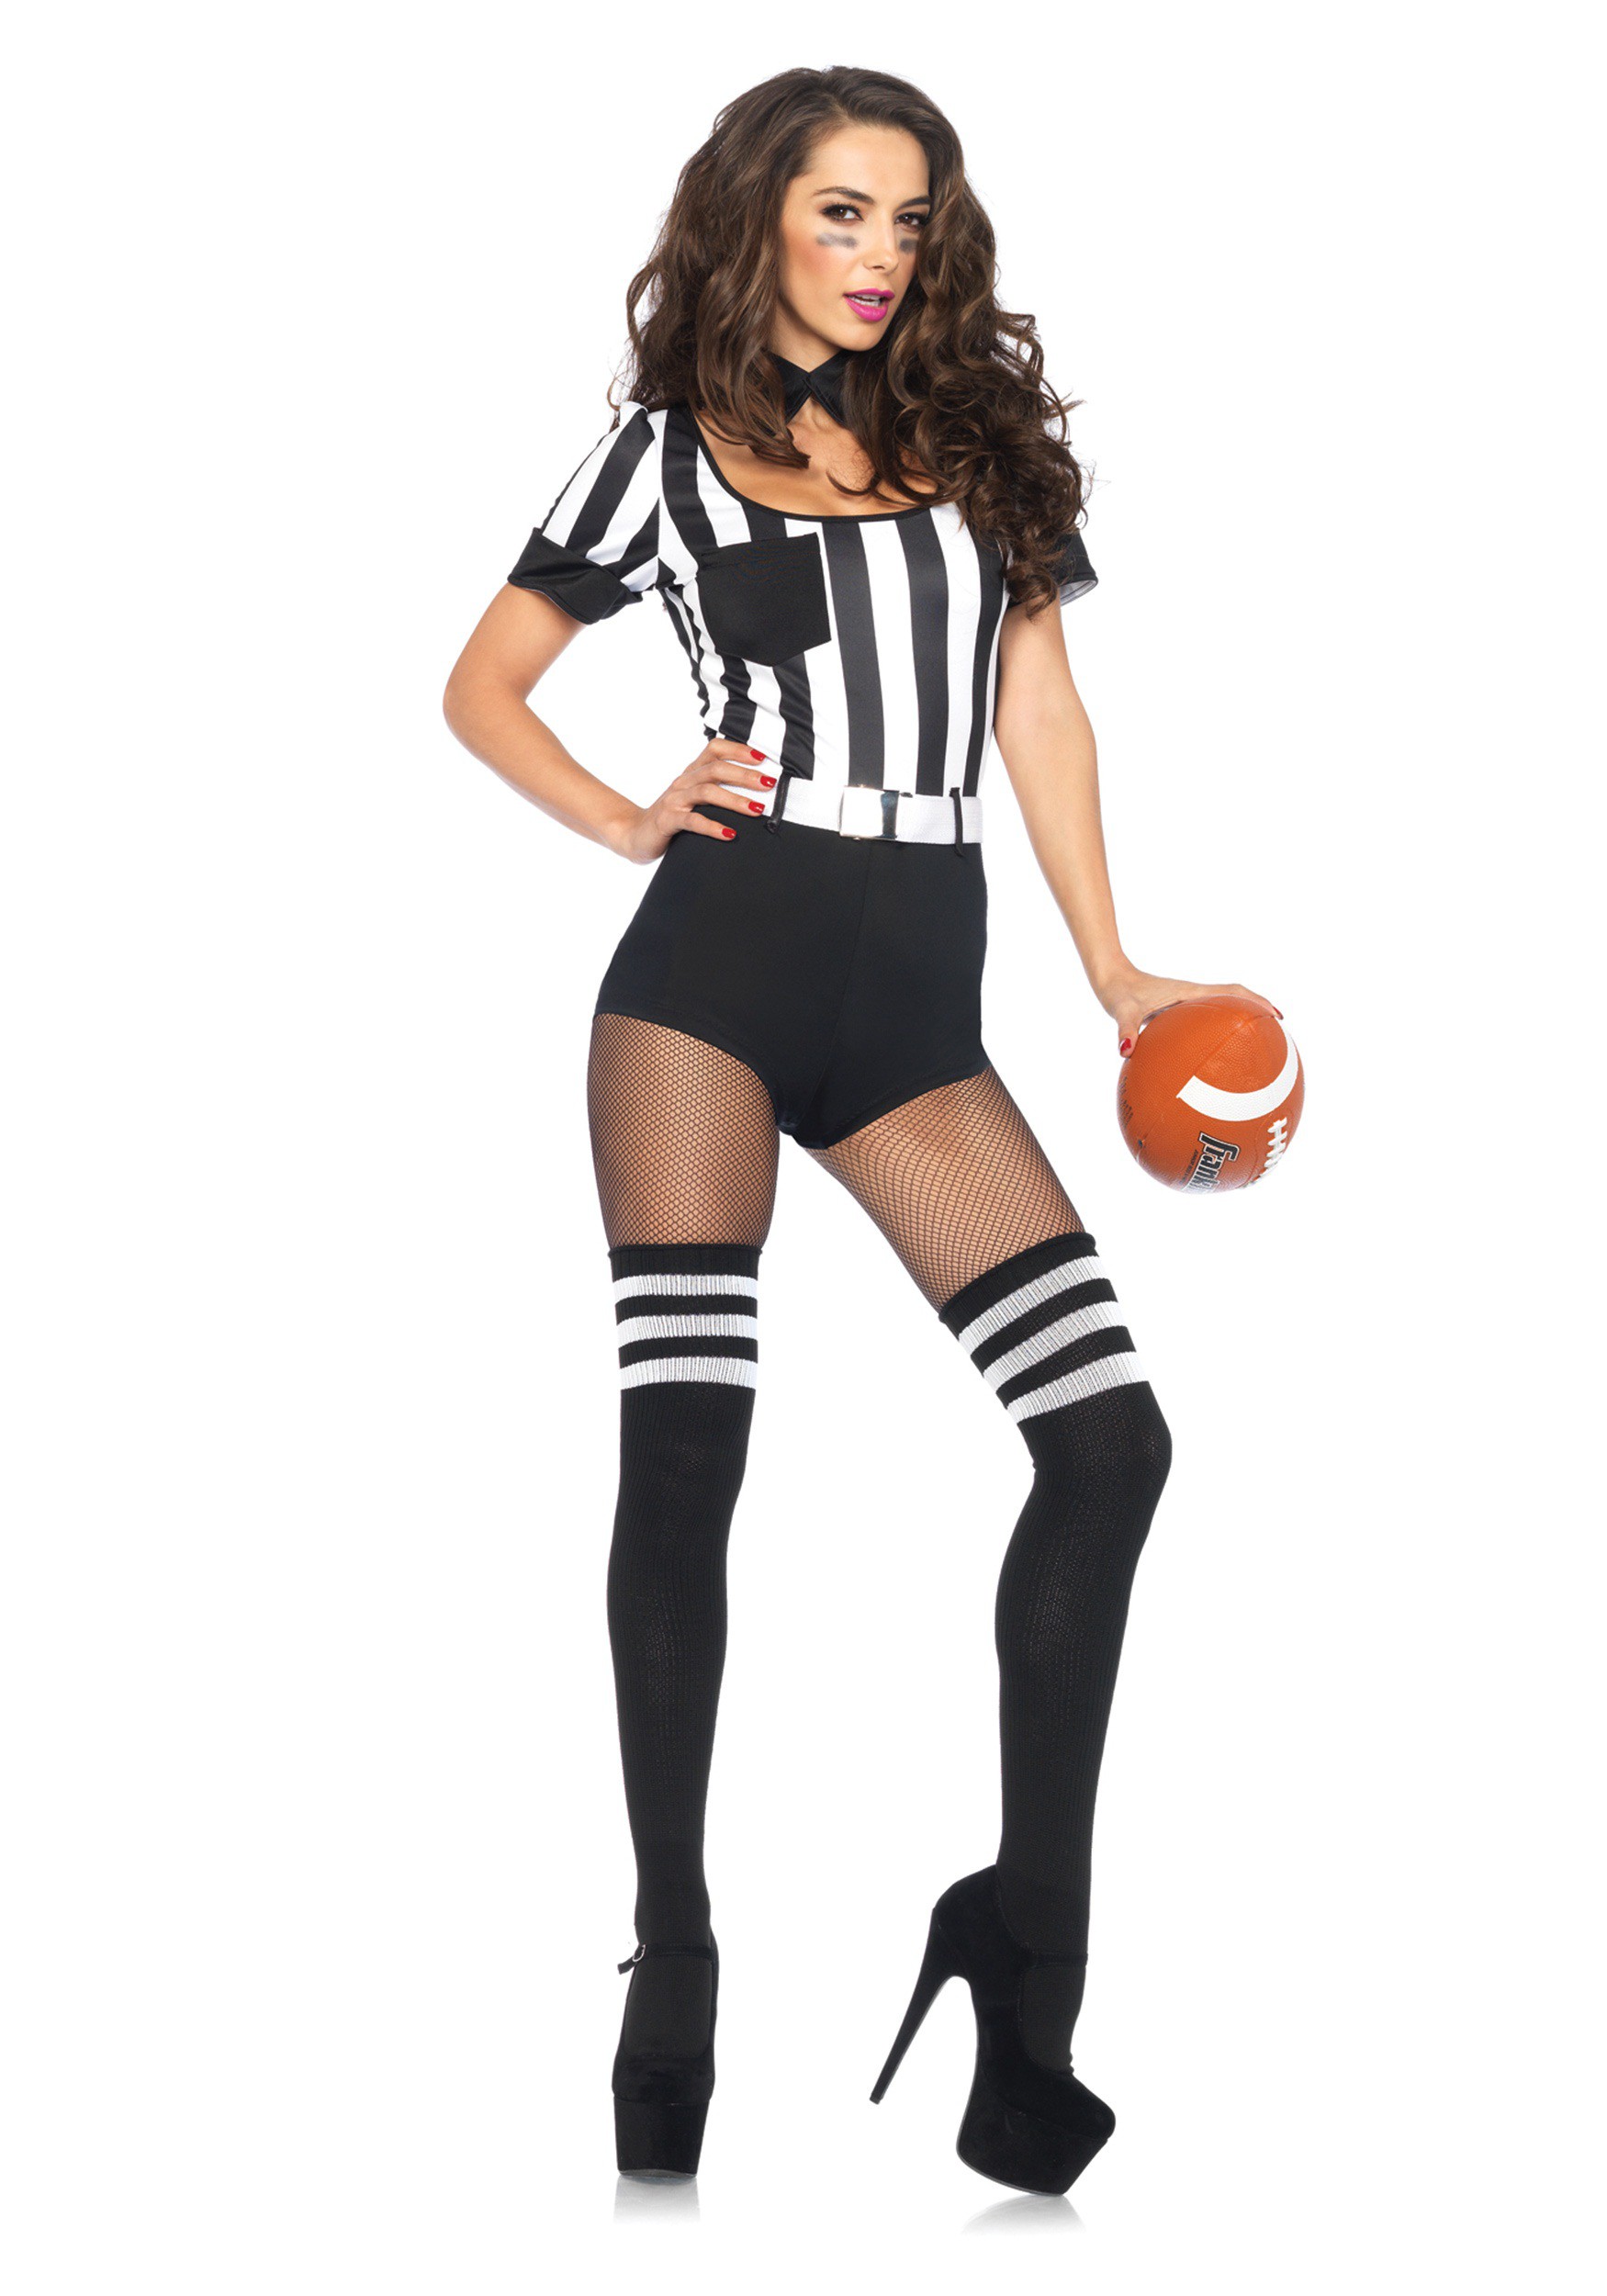 No Rules Referee Women's Costume